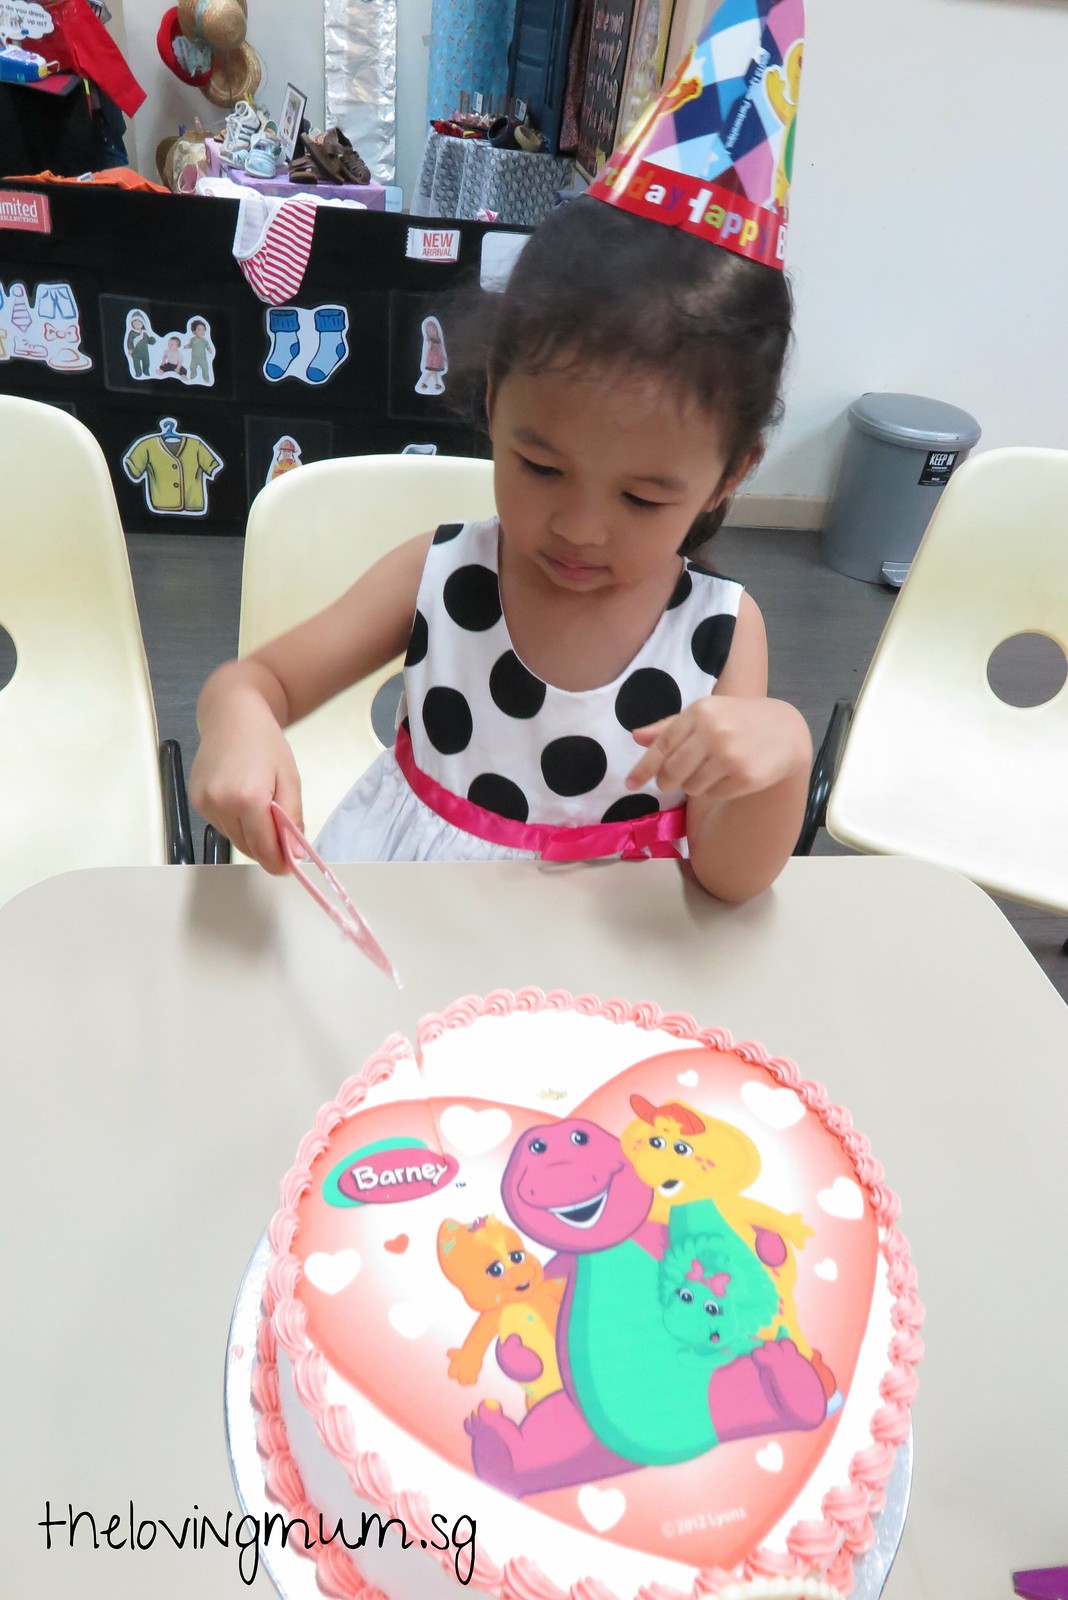 12 Sep 2014 - Ayra Birthday Celebration at Playgroup